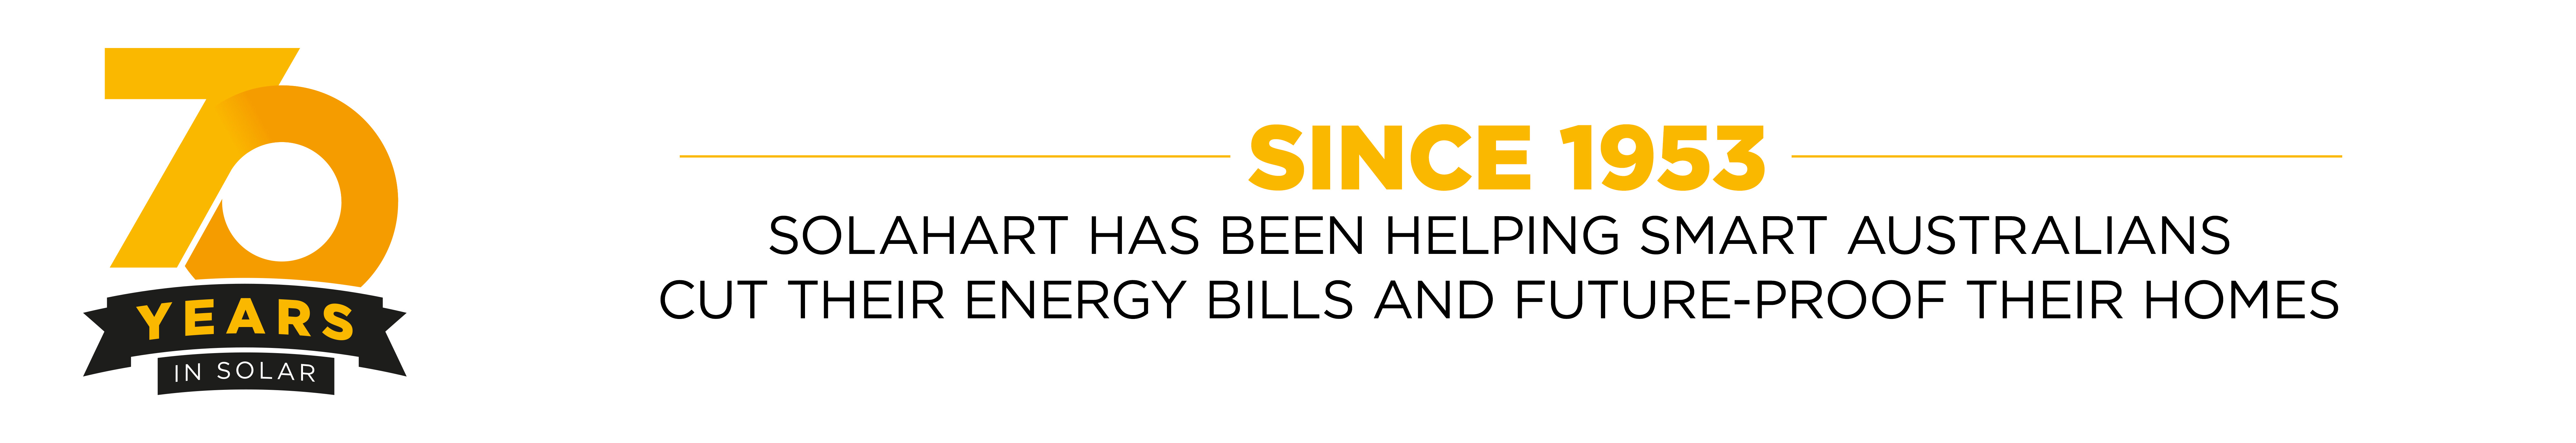 Solahart, helping smart Australians cut their energy bills for 70 years.